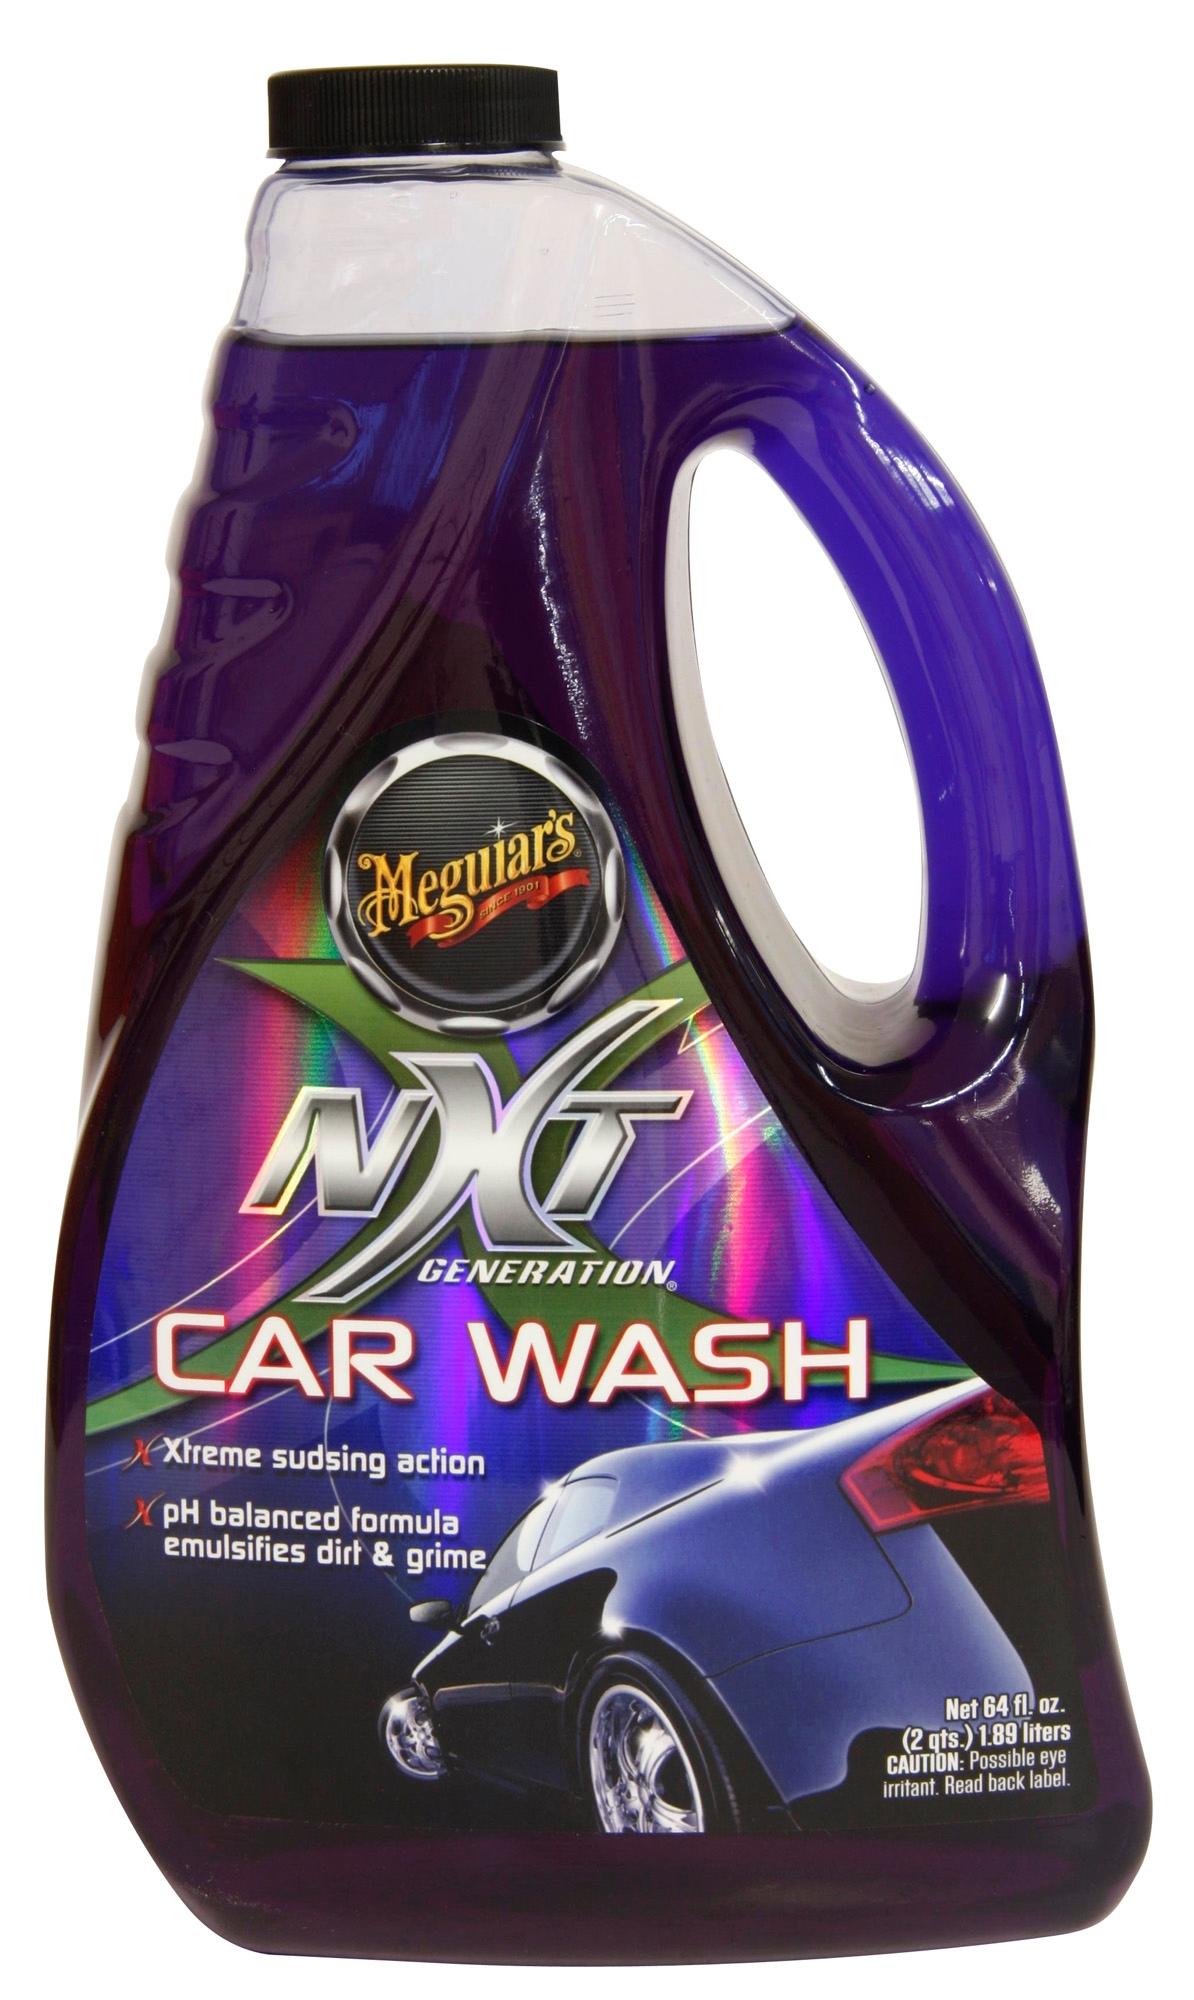 Meguiars Nxt Generation Car Wash 1.89 Litre